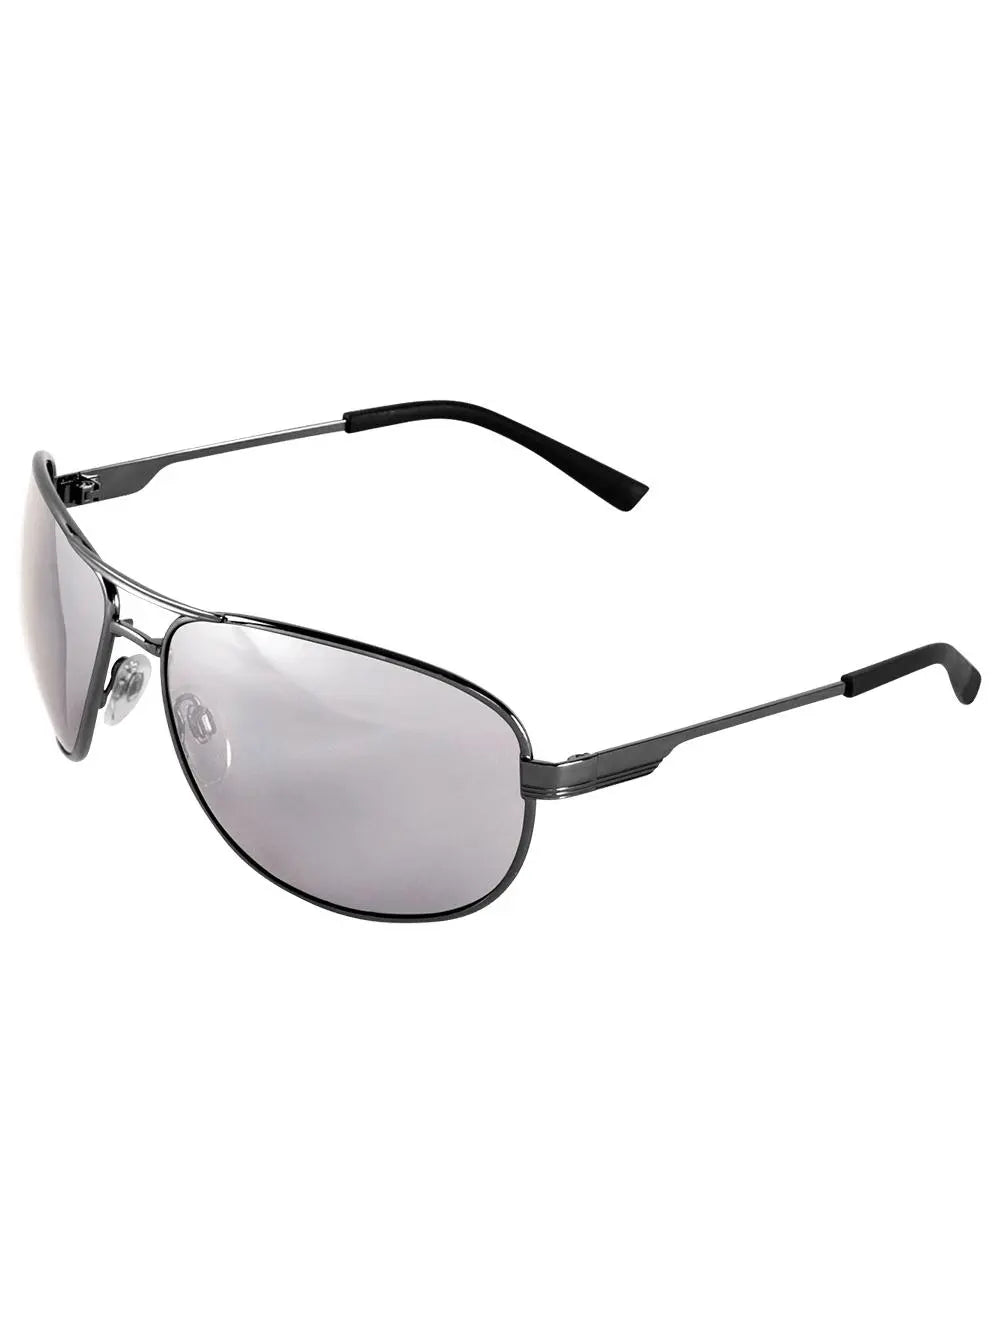 BULLHEAD SAFETY - Acero Silver Mirror Lens Safety Glasses, Gunmetal